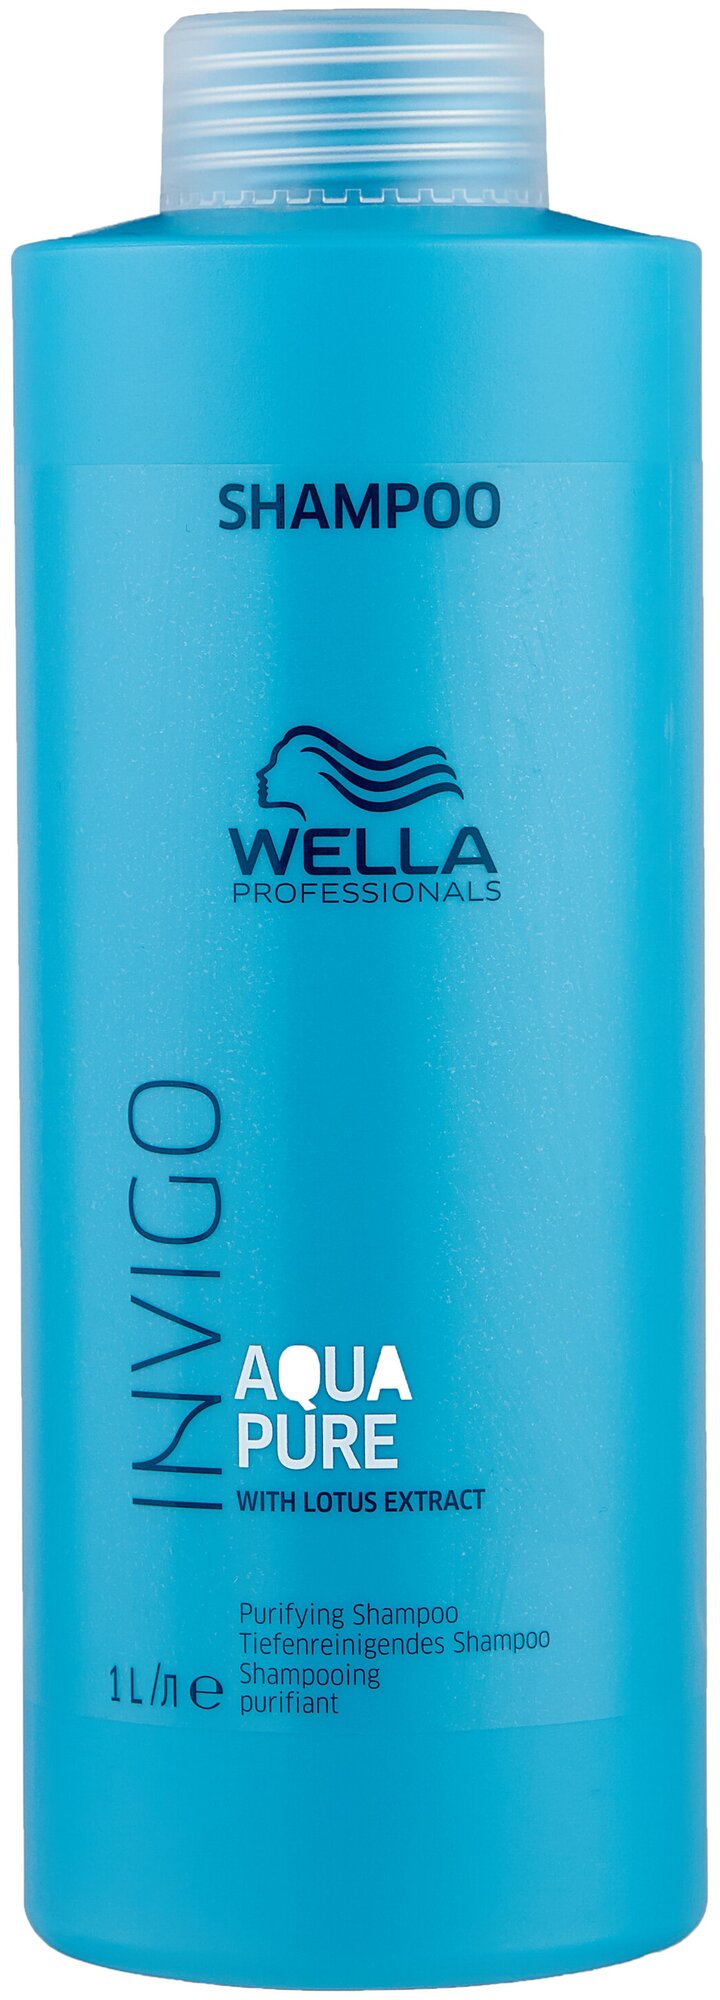 Wella Professionals шампунь Invigo Balance Aqua Pure очищающий, 1000 мл